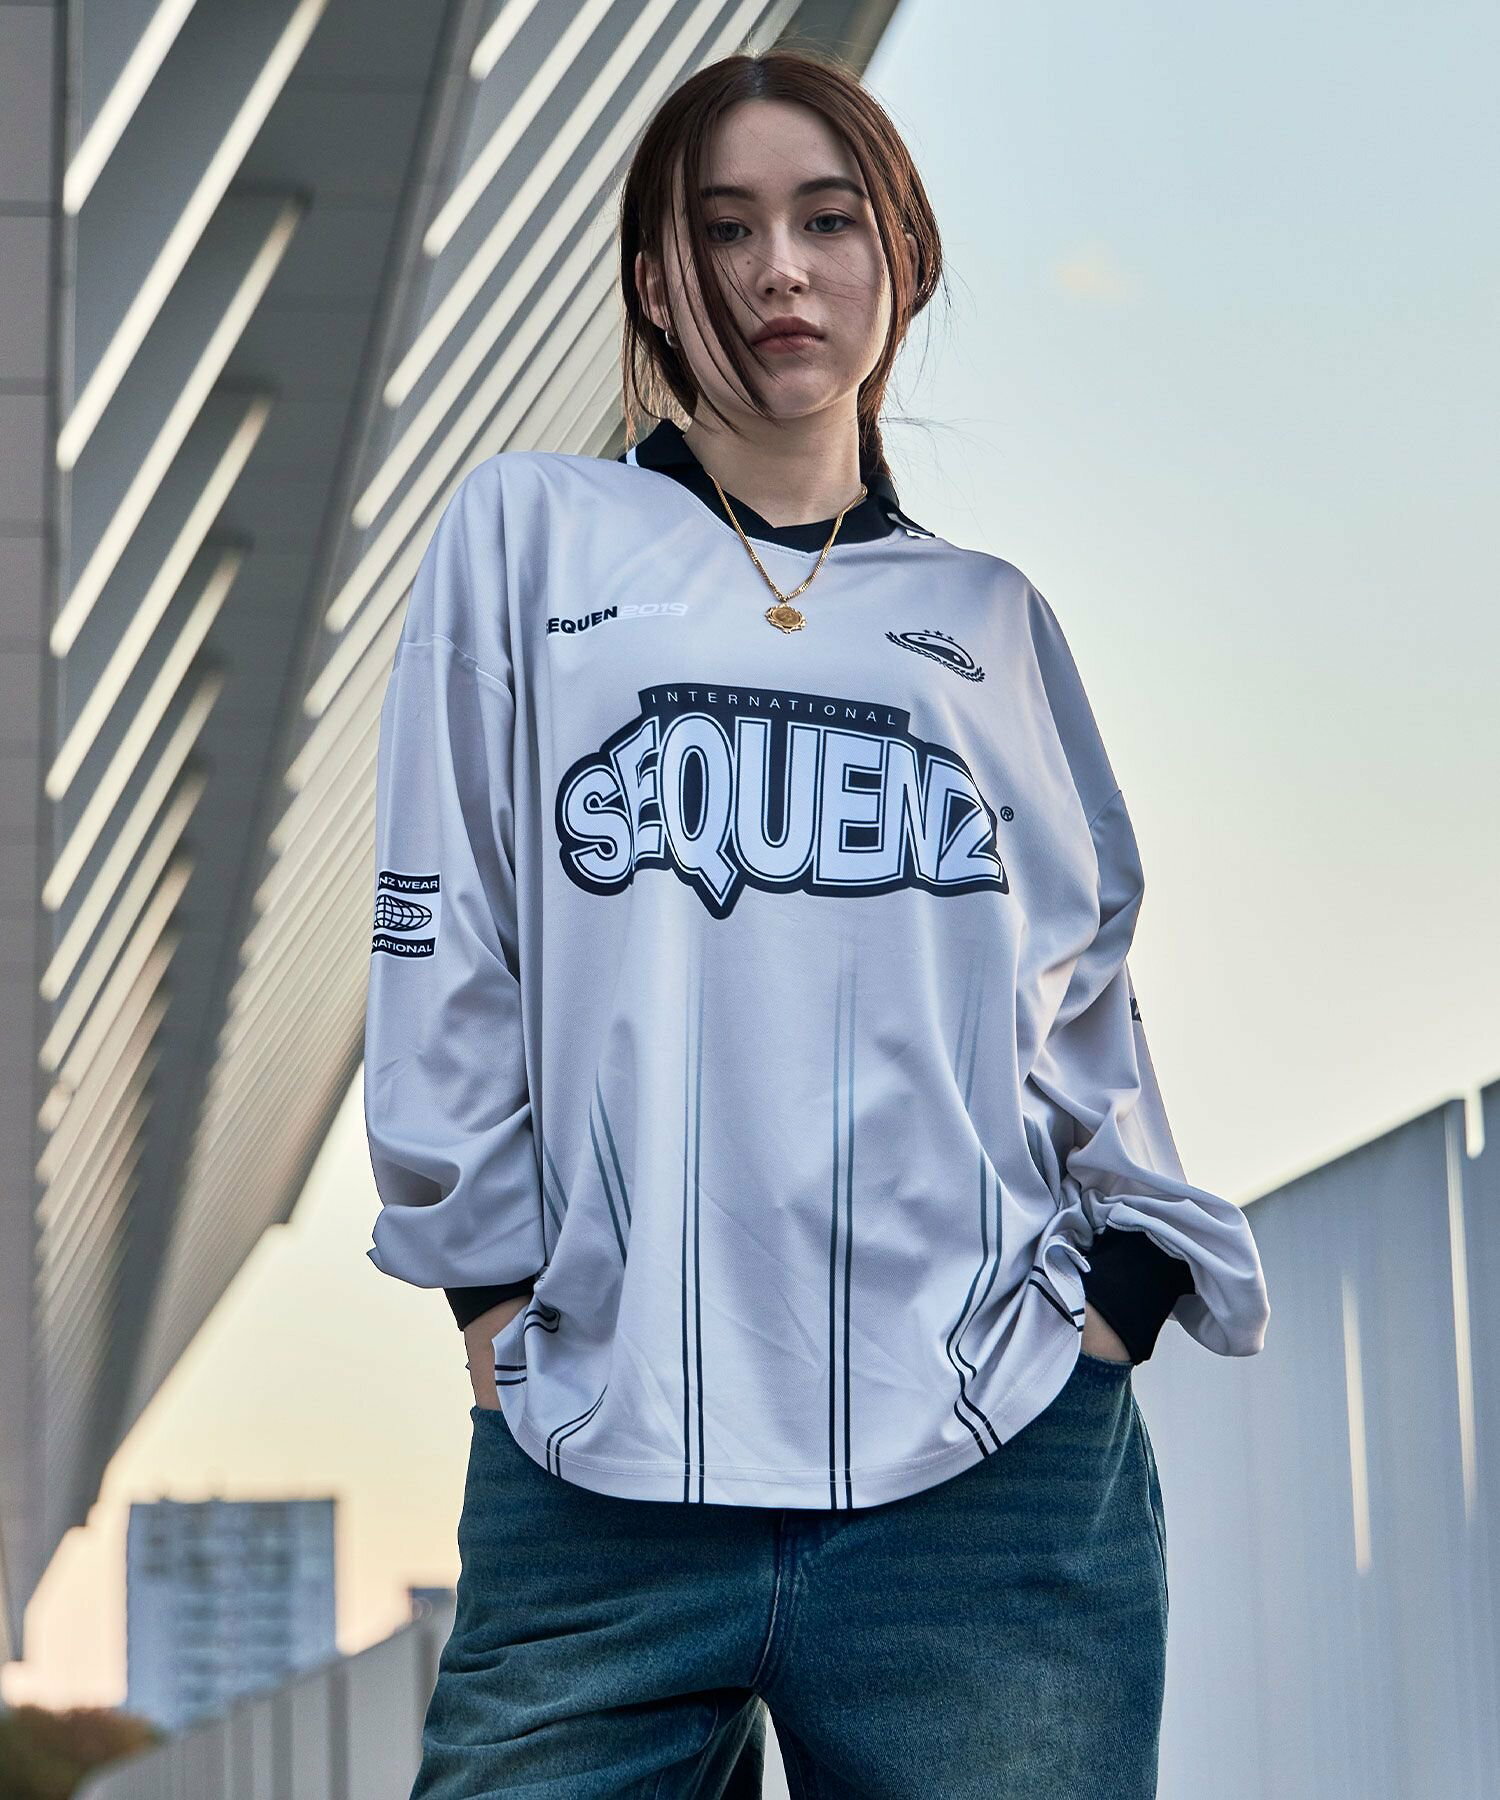 【SEQUENZ】 SQNZ L/S GAME SHIRT / ゲームシャツ ストライプ ビックシルエット ルーズフィット ブランドロゴ プルオーバー Vネック